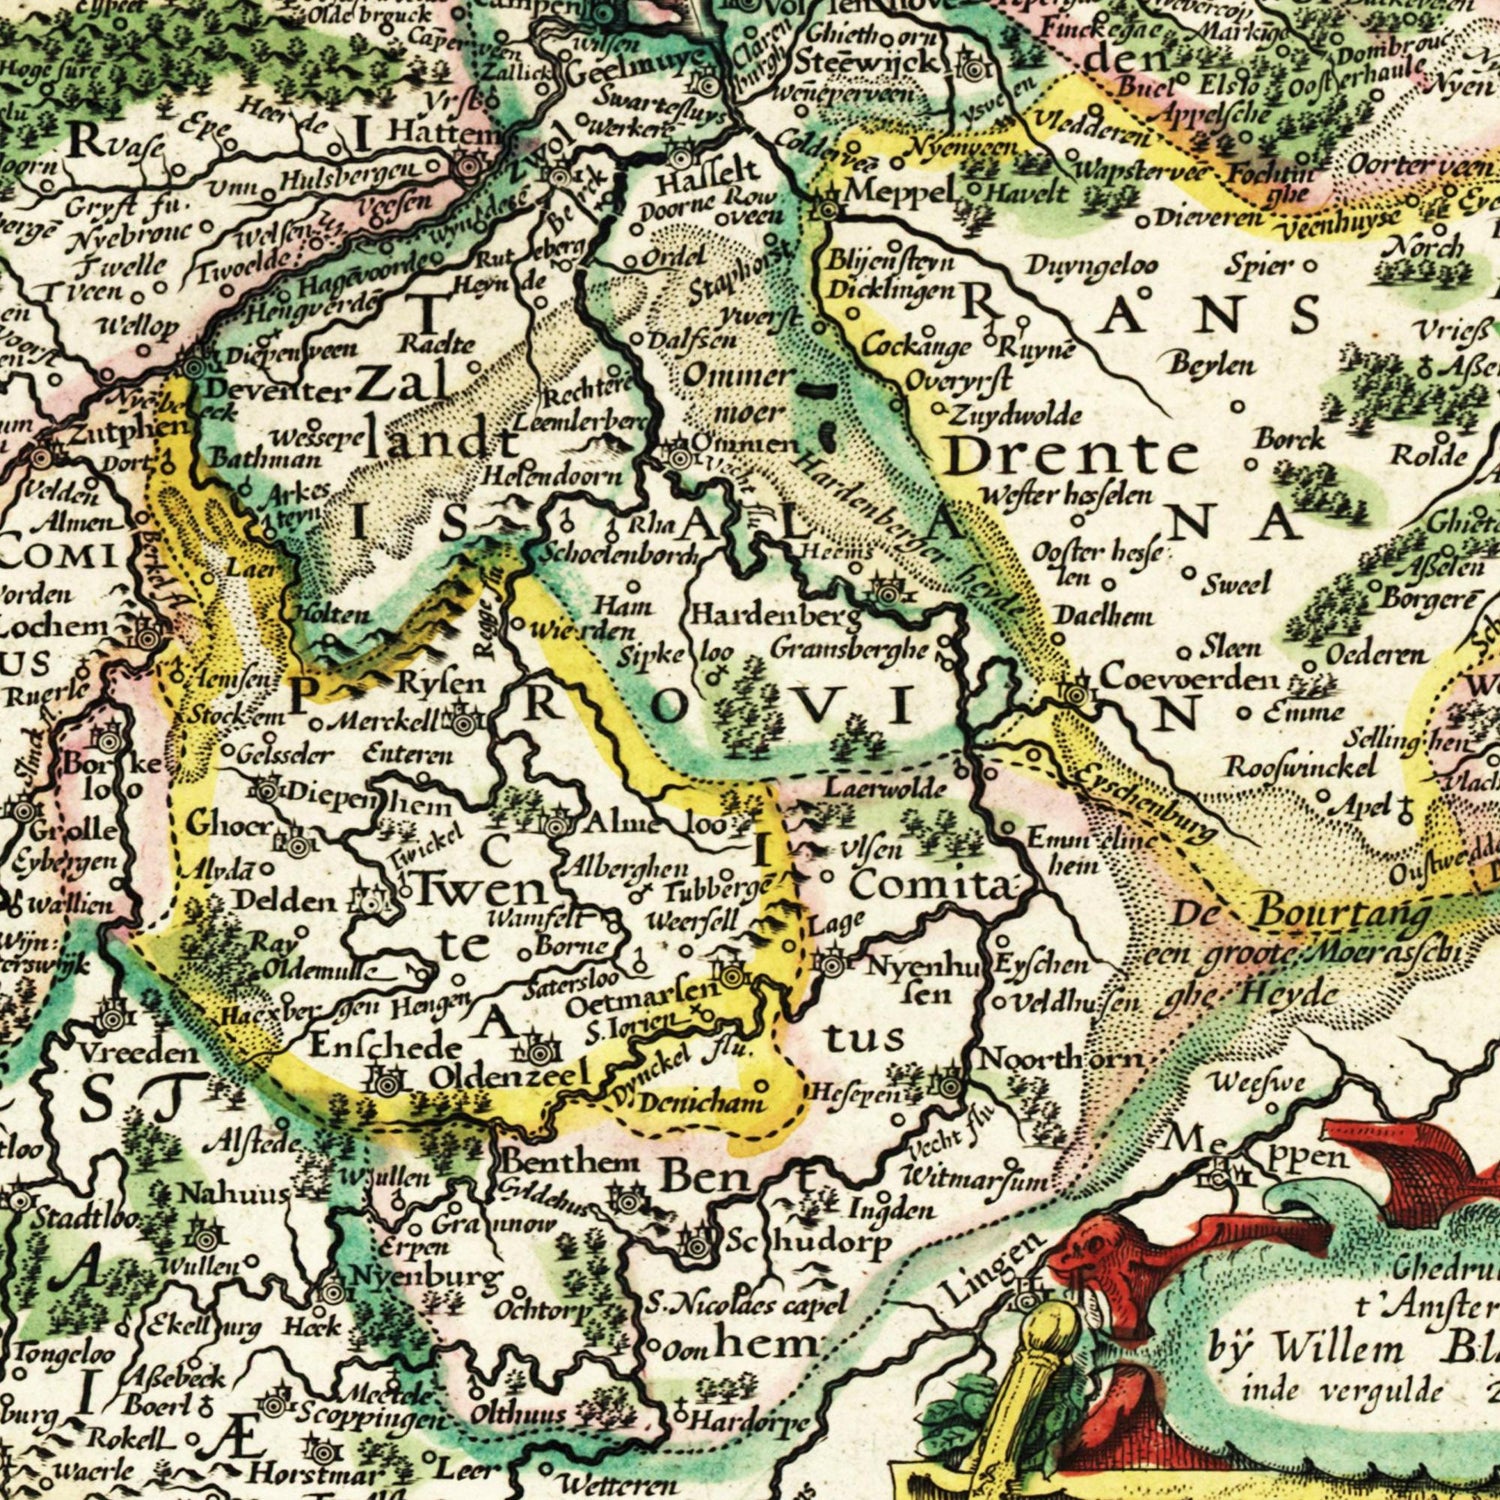 Landkarte Niederlande um 1647 | Rothert Kartenhandlung